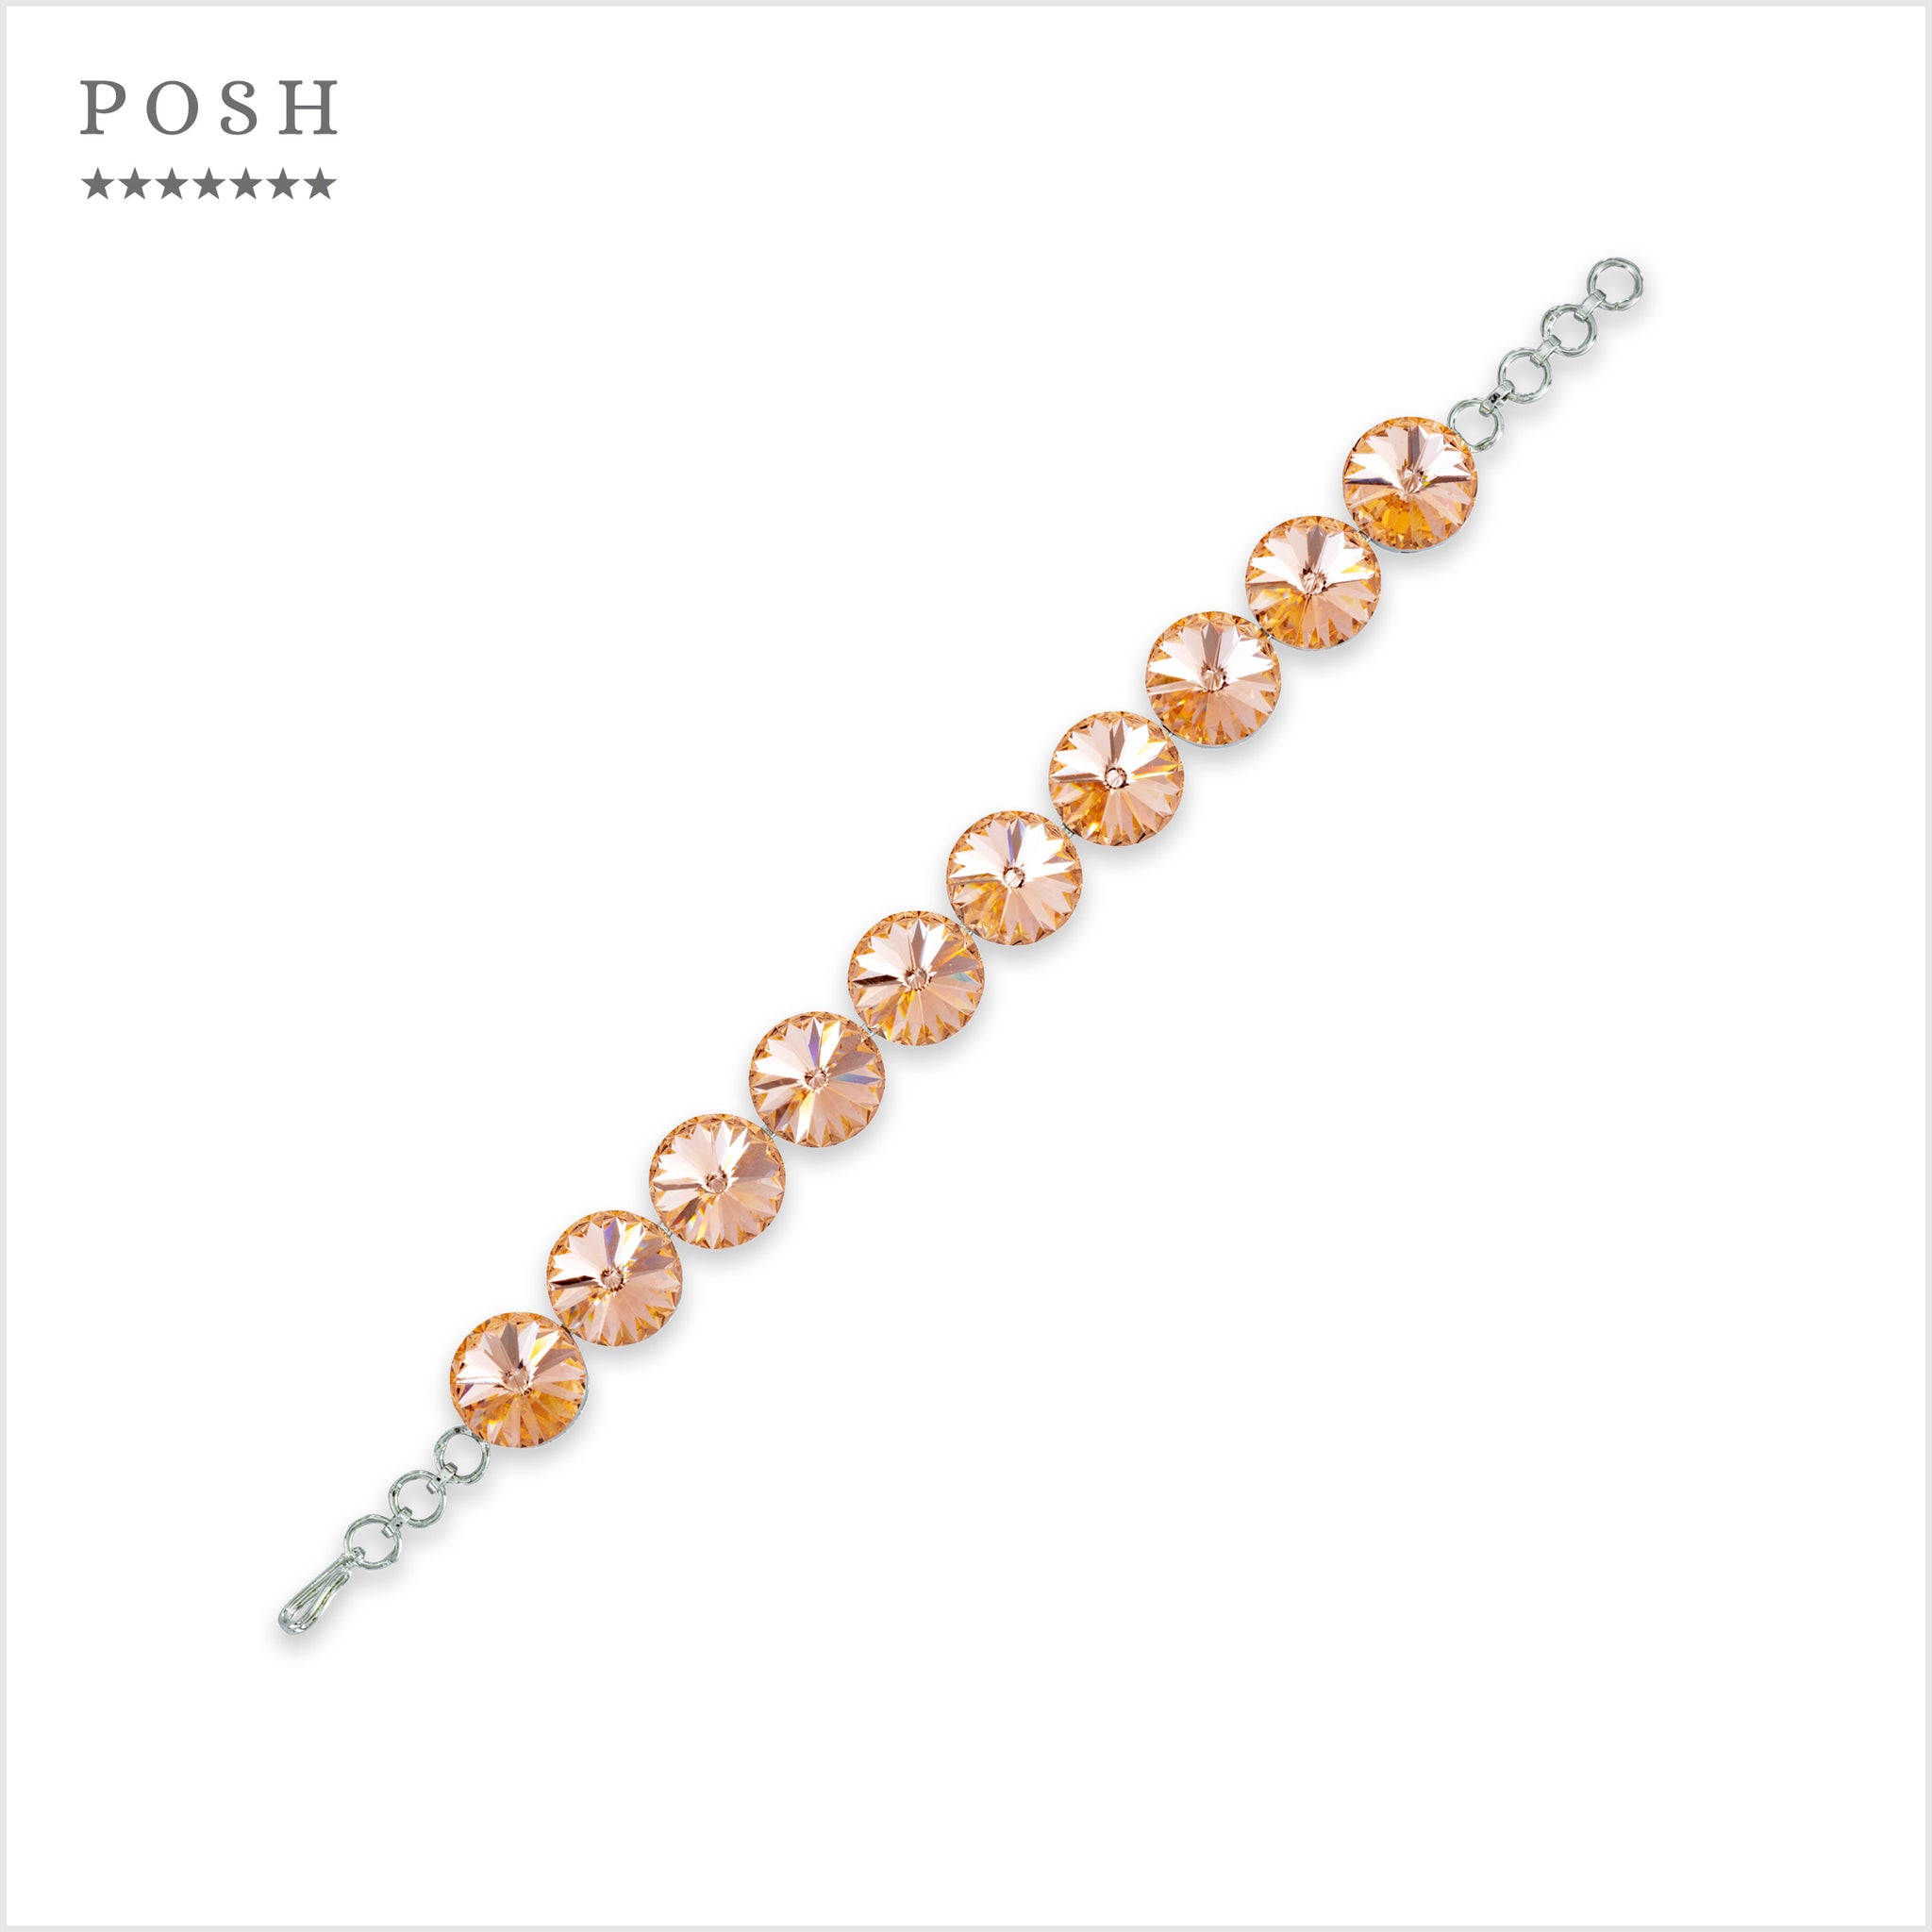 PRAO's Modish Rounded Chain Bracelet